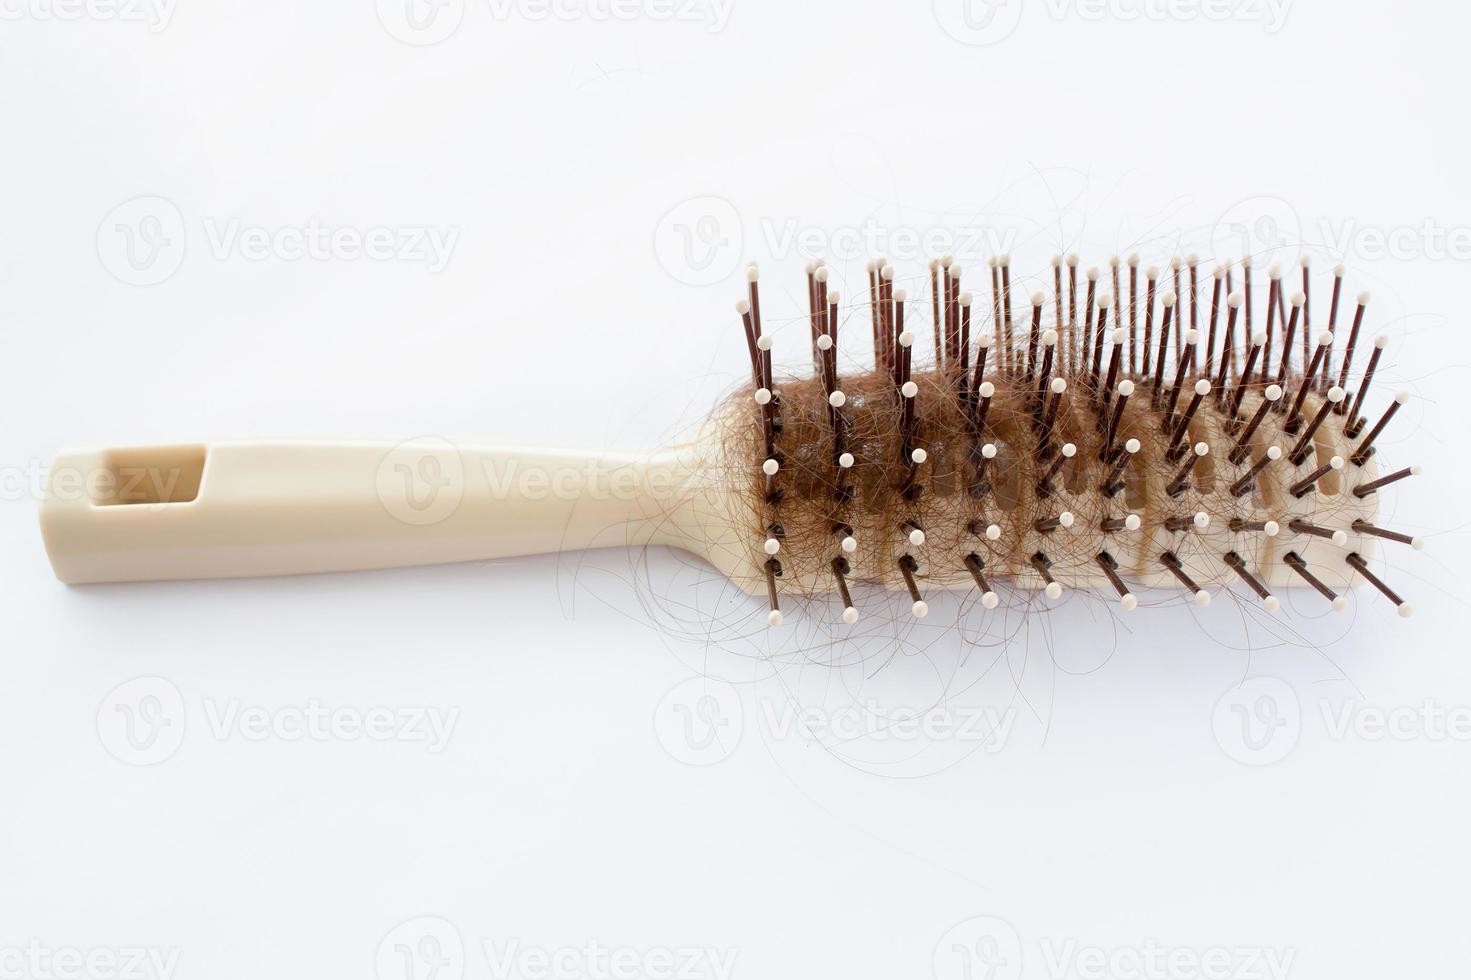 escova de cabelo com cabelo perdido no fundo branco foto